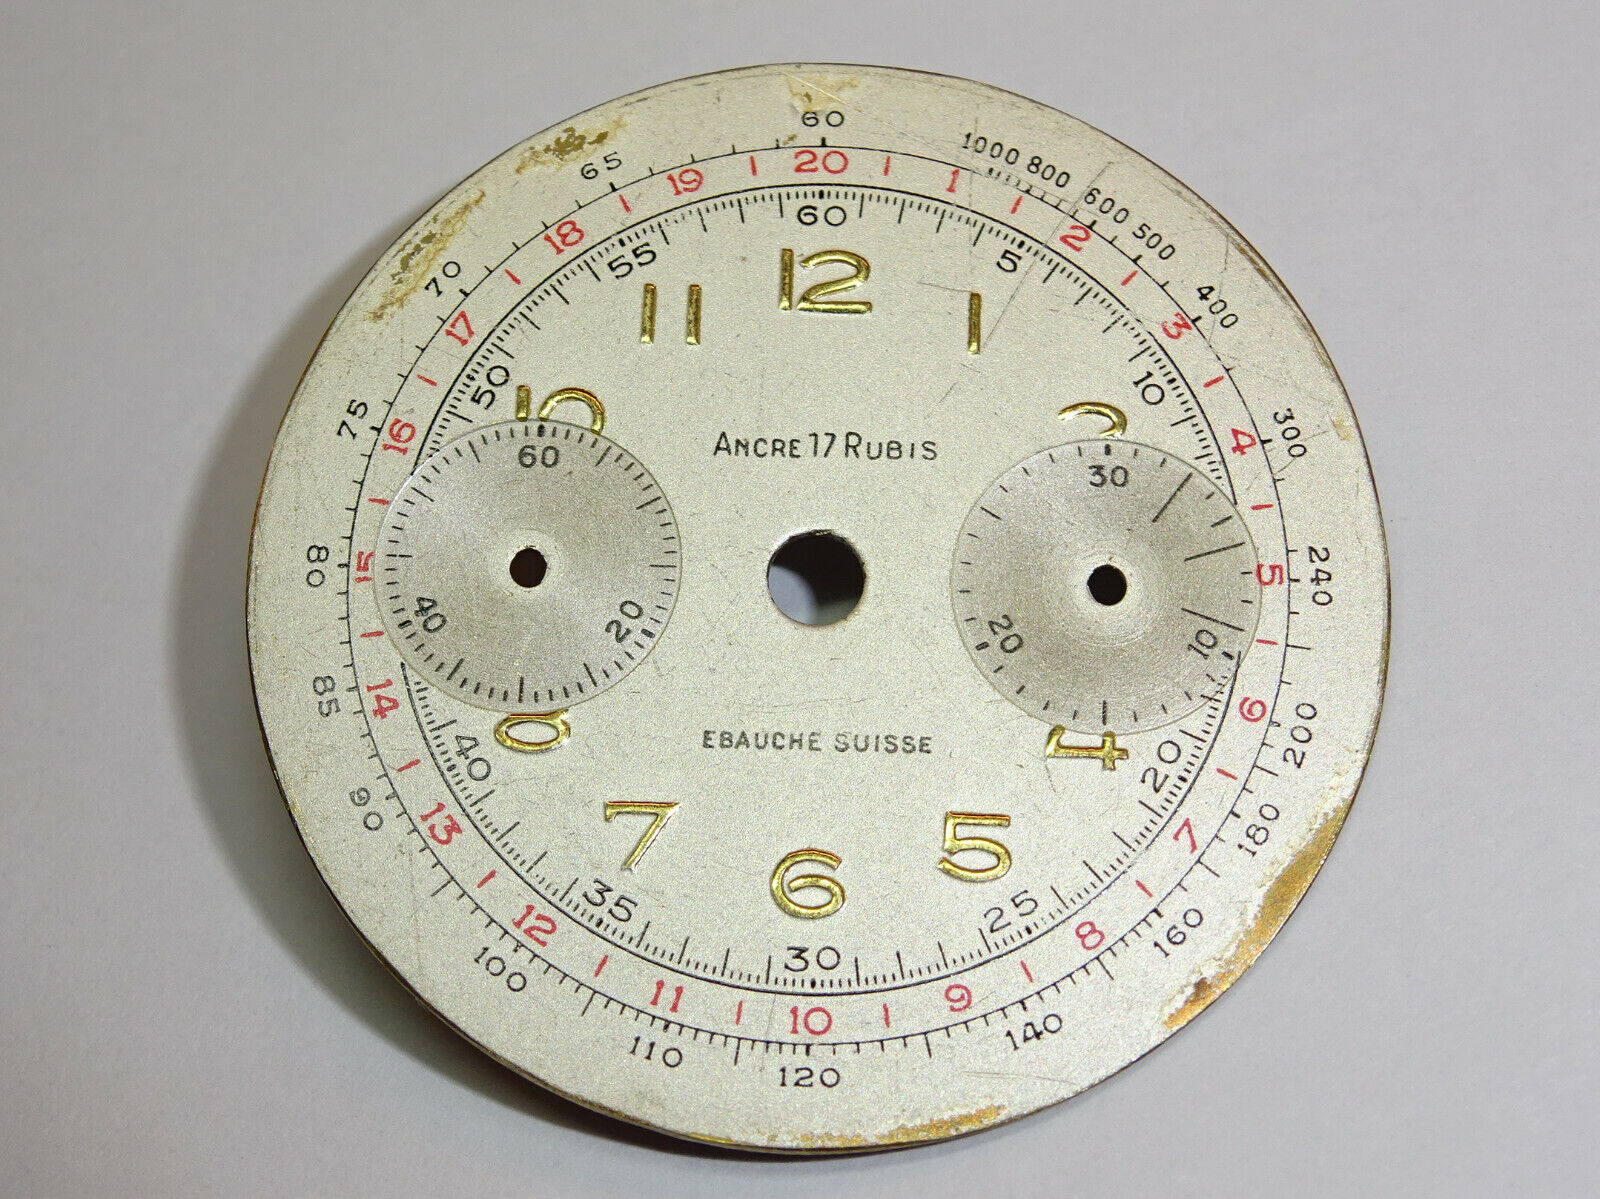 Venus 188 dial (31.6mm) / Cadran Venus 188